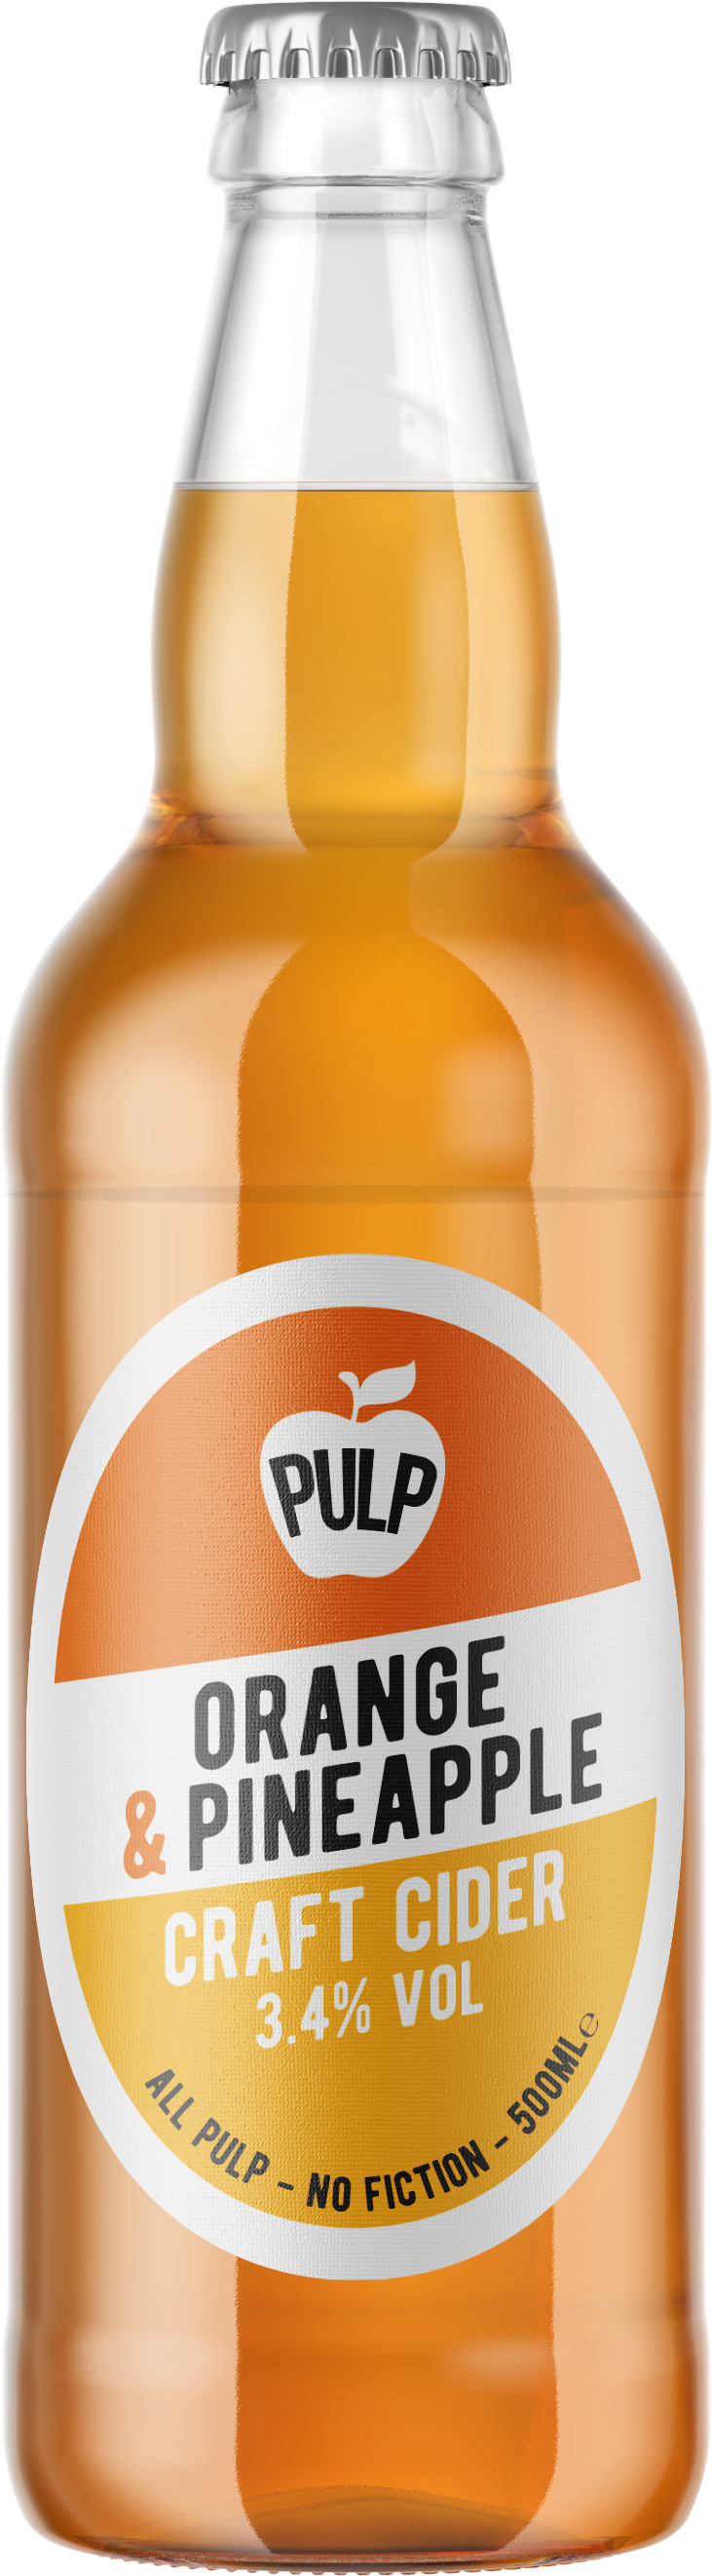 PULP Orange and Pineapple 3.4% 12 x 500ml Bottles